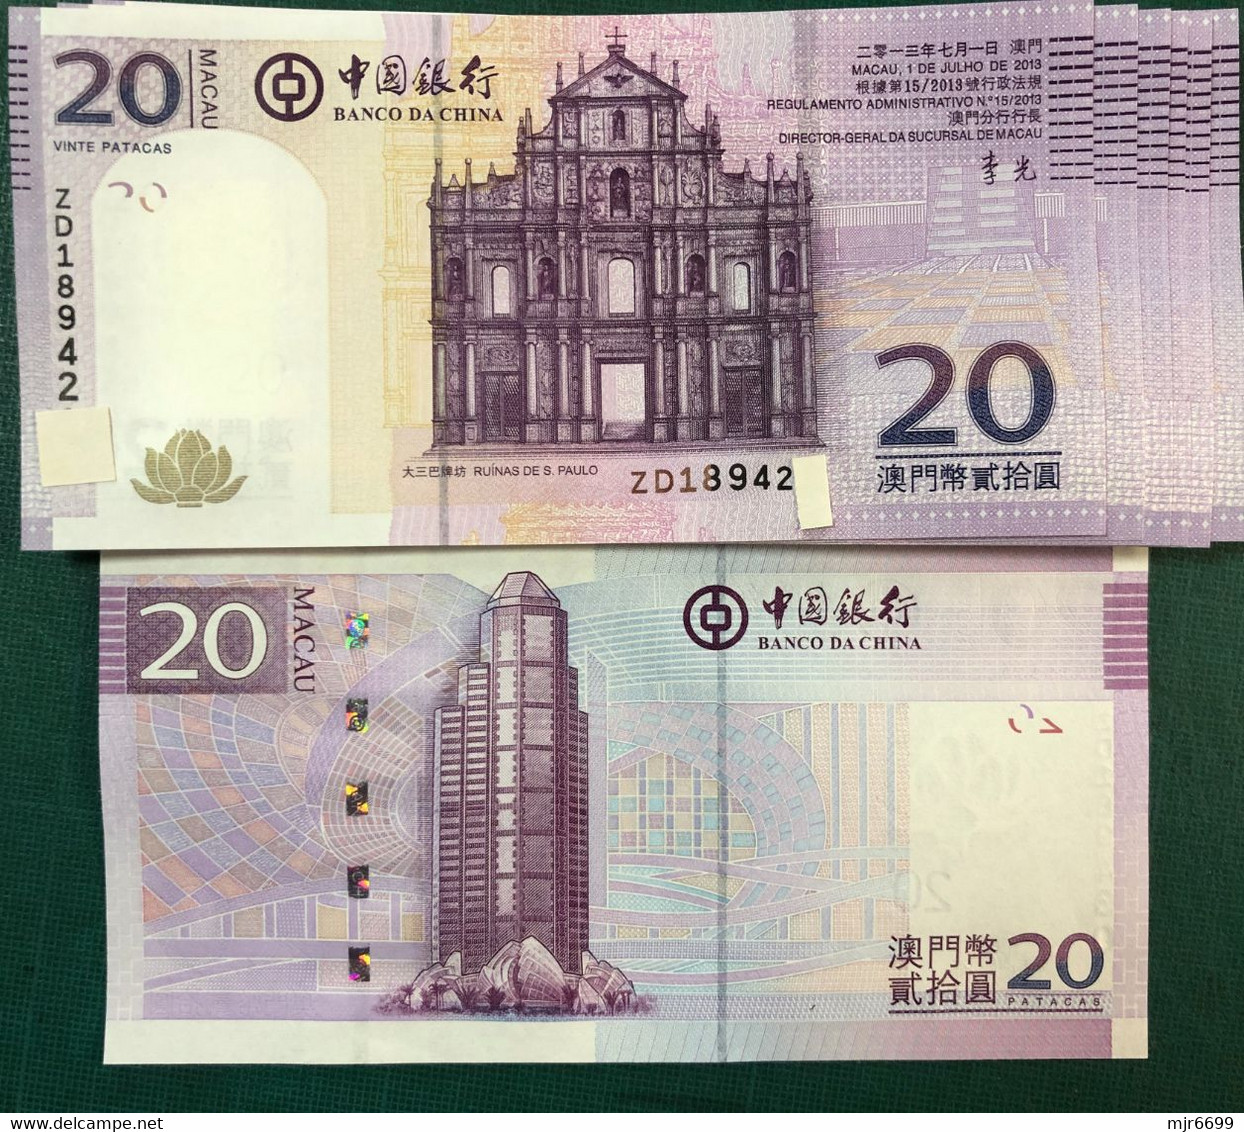 MACAU, BANK OF CHINA  2013 20 PATACAS - REPLACEMENT ZD189442... SERIAL - UNC - RARE - Macau